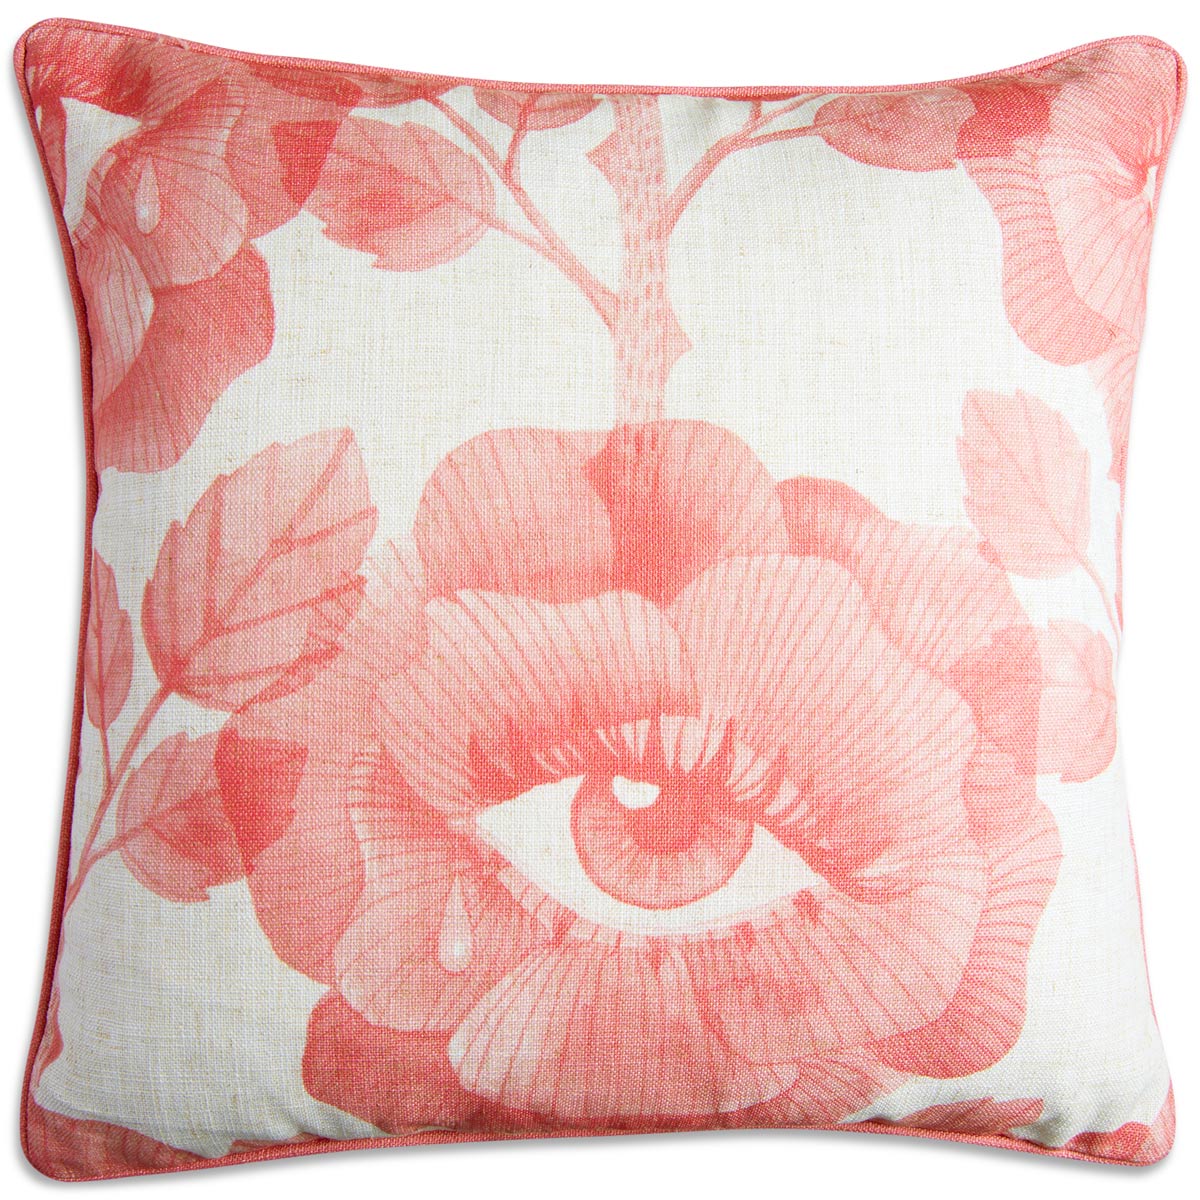 Floral Eyes Pillow in Blush - ModShop1.com